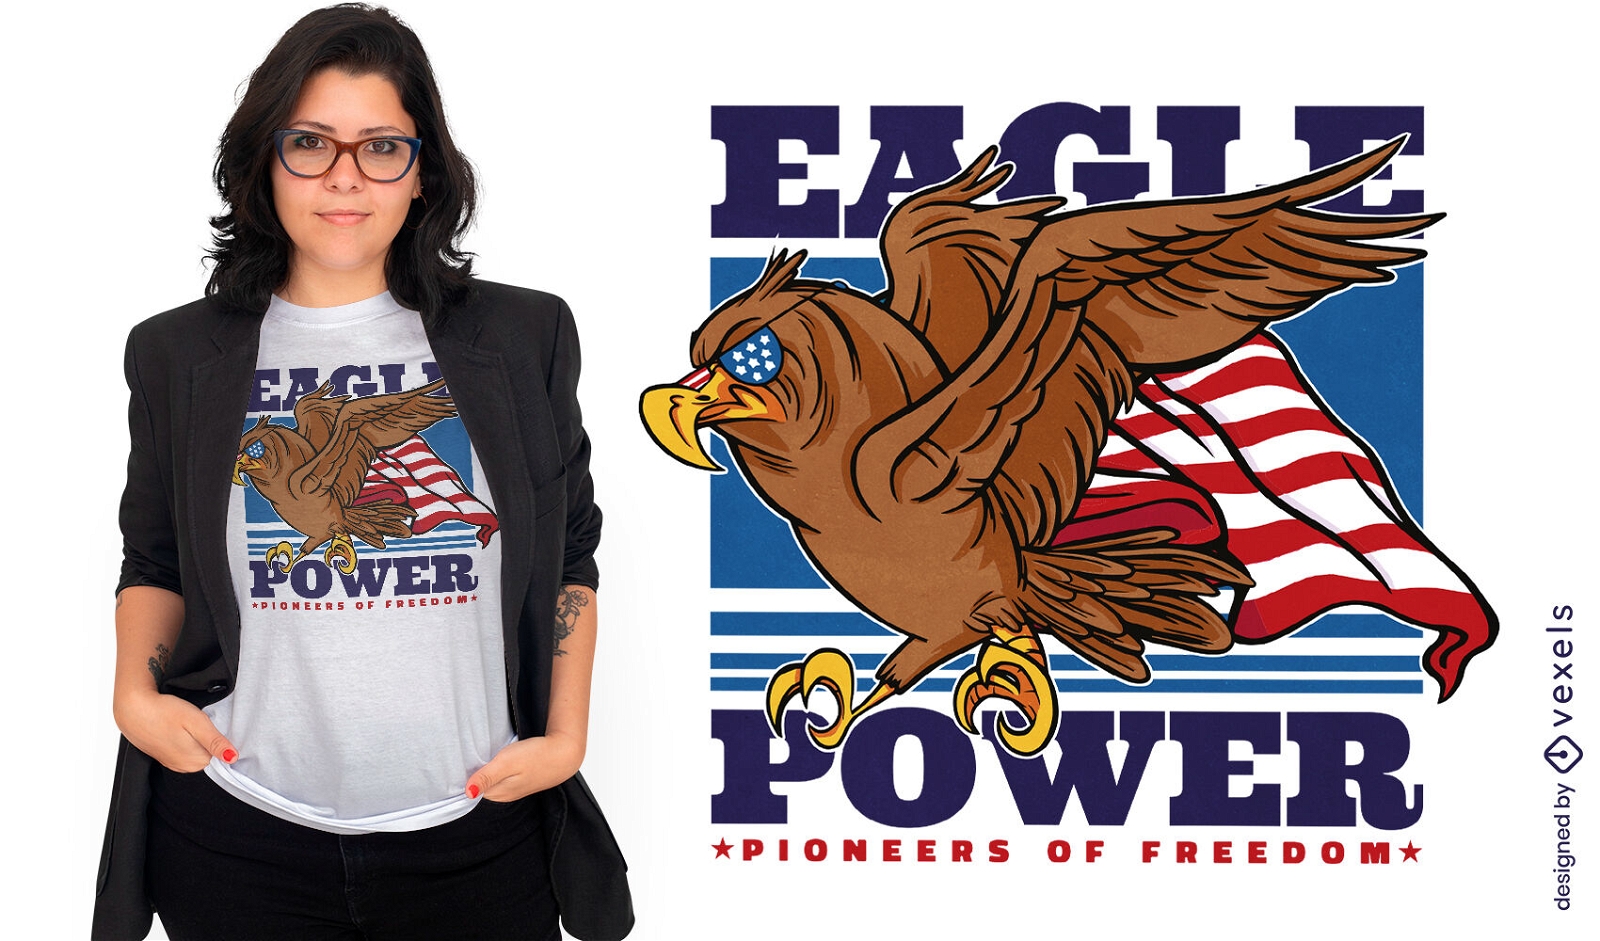 American eagle power t-shirt design